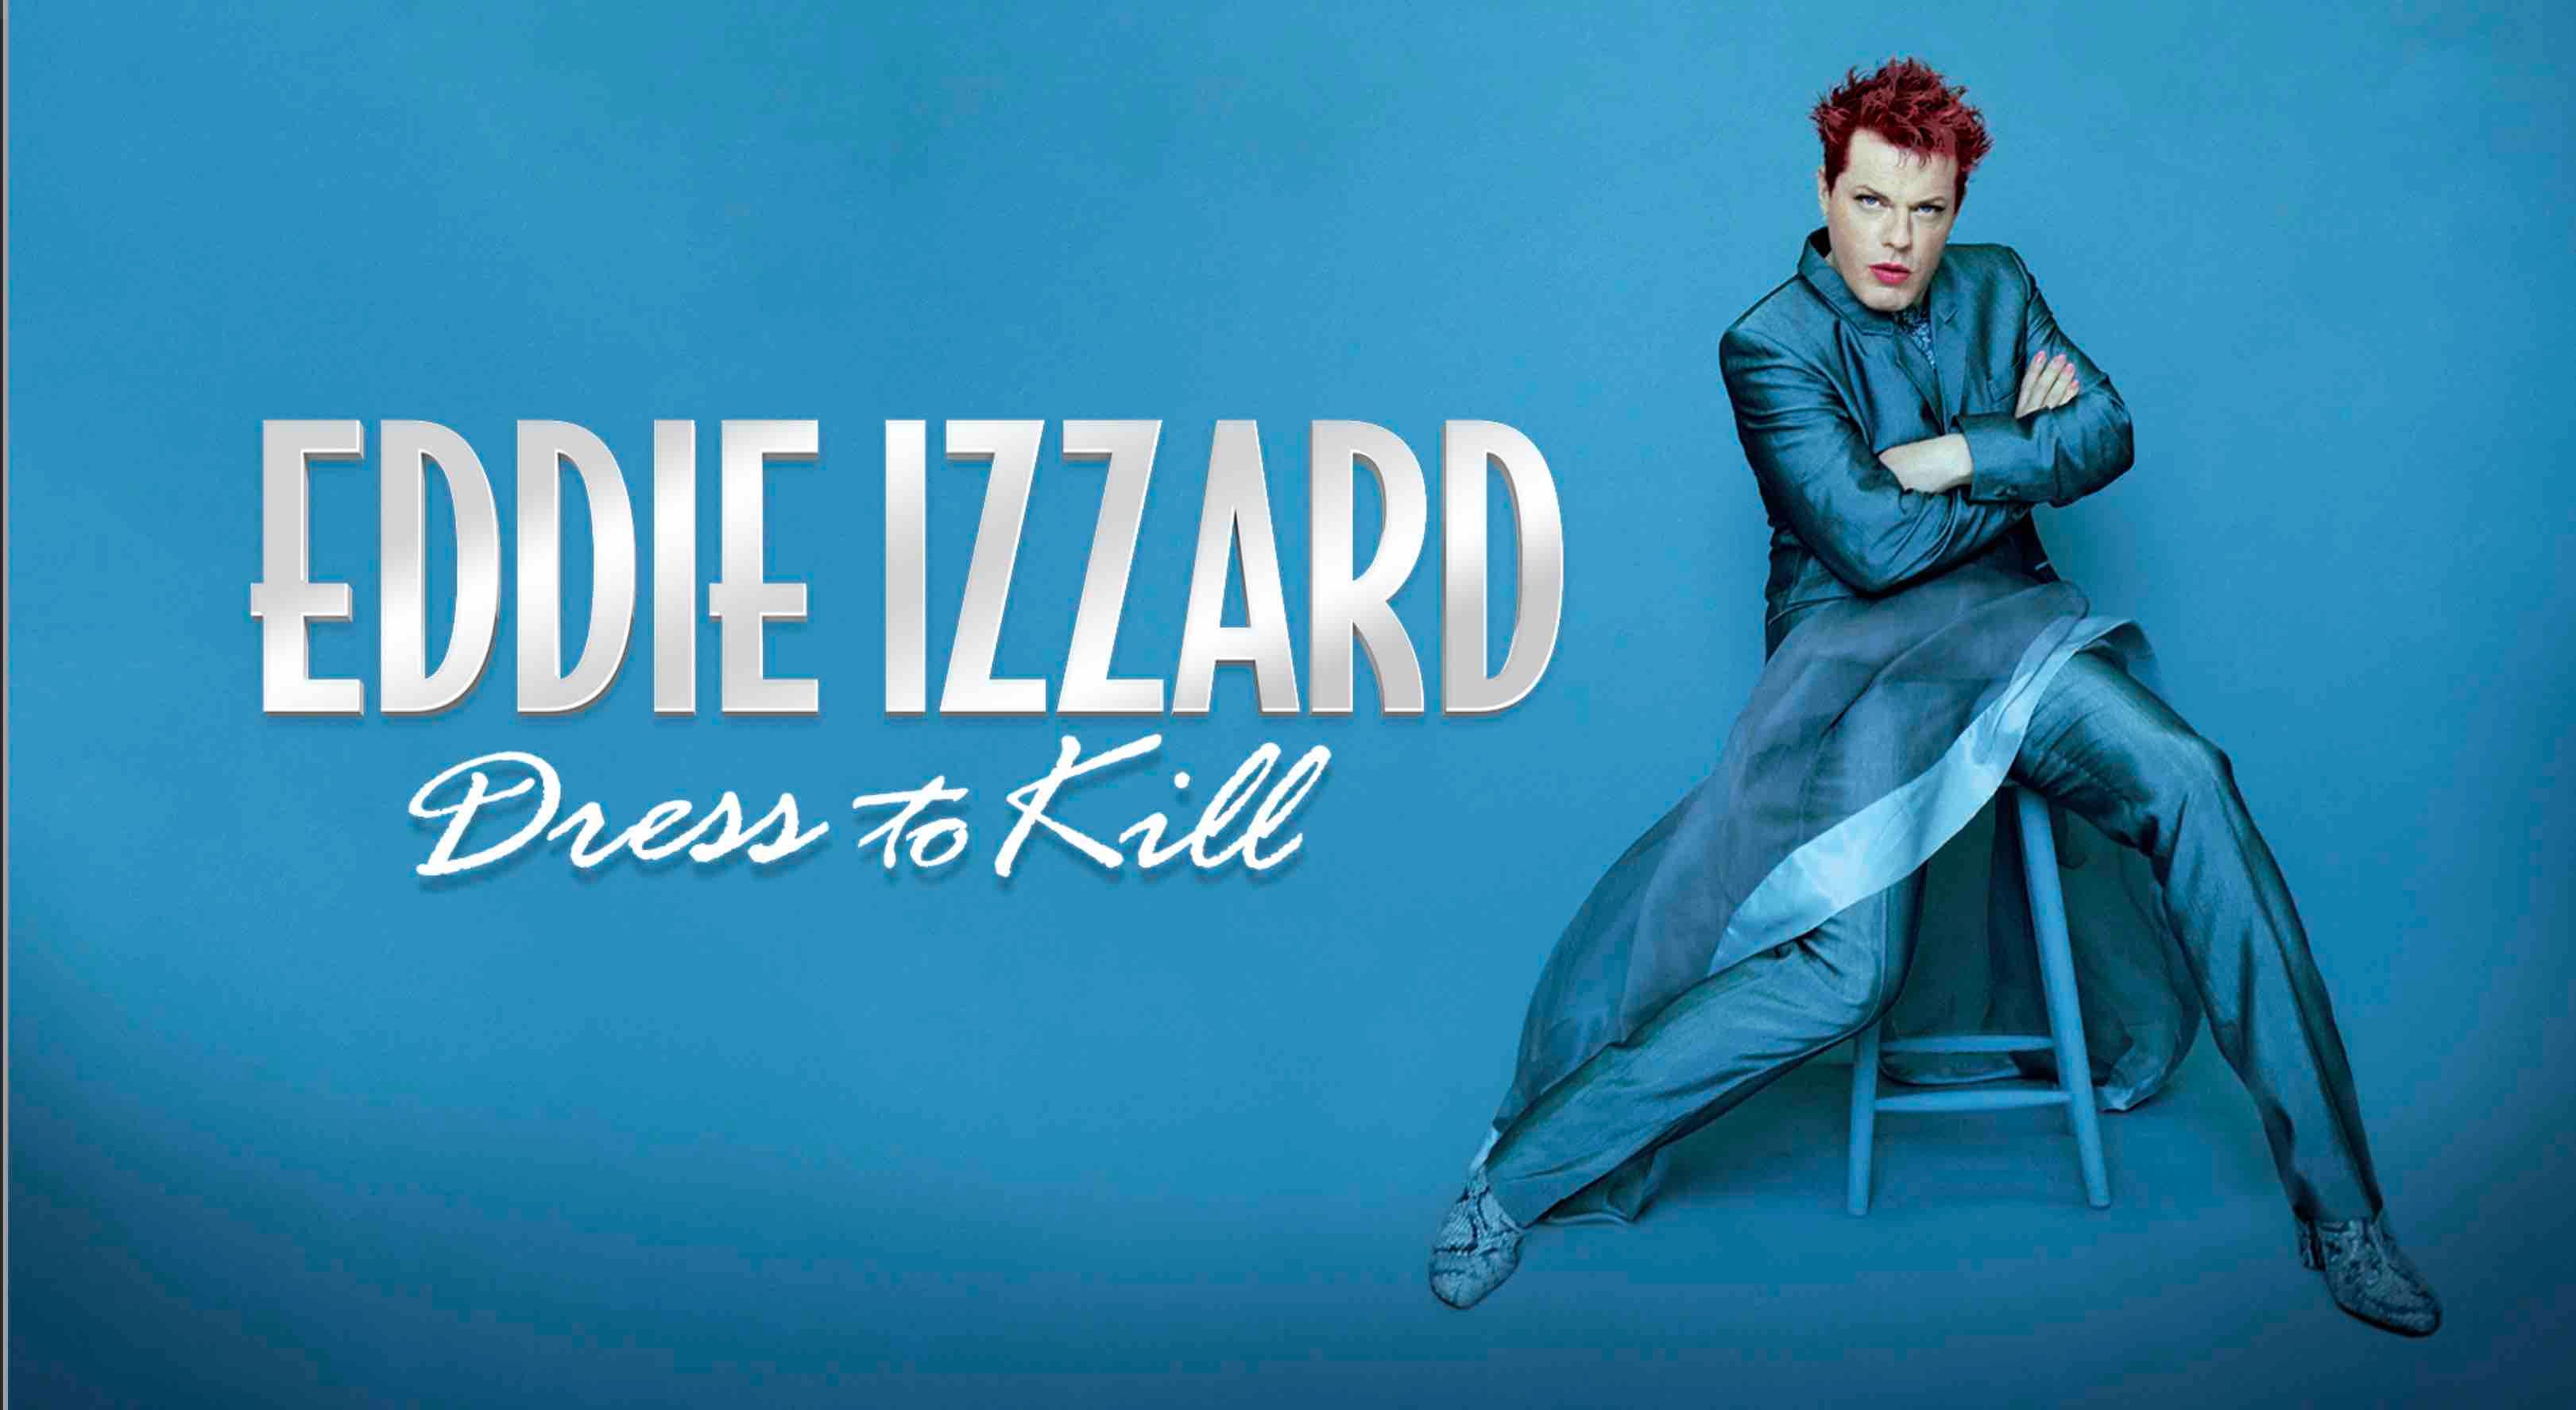 Без купюр эдди. Эдди Иззард (Eddie Izzard). Эдди Иззард Dress to Kill. Эдди Иззард (Eddie Izzard) ножки.